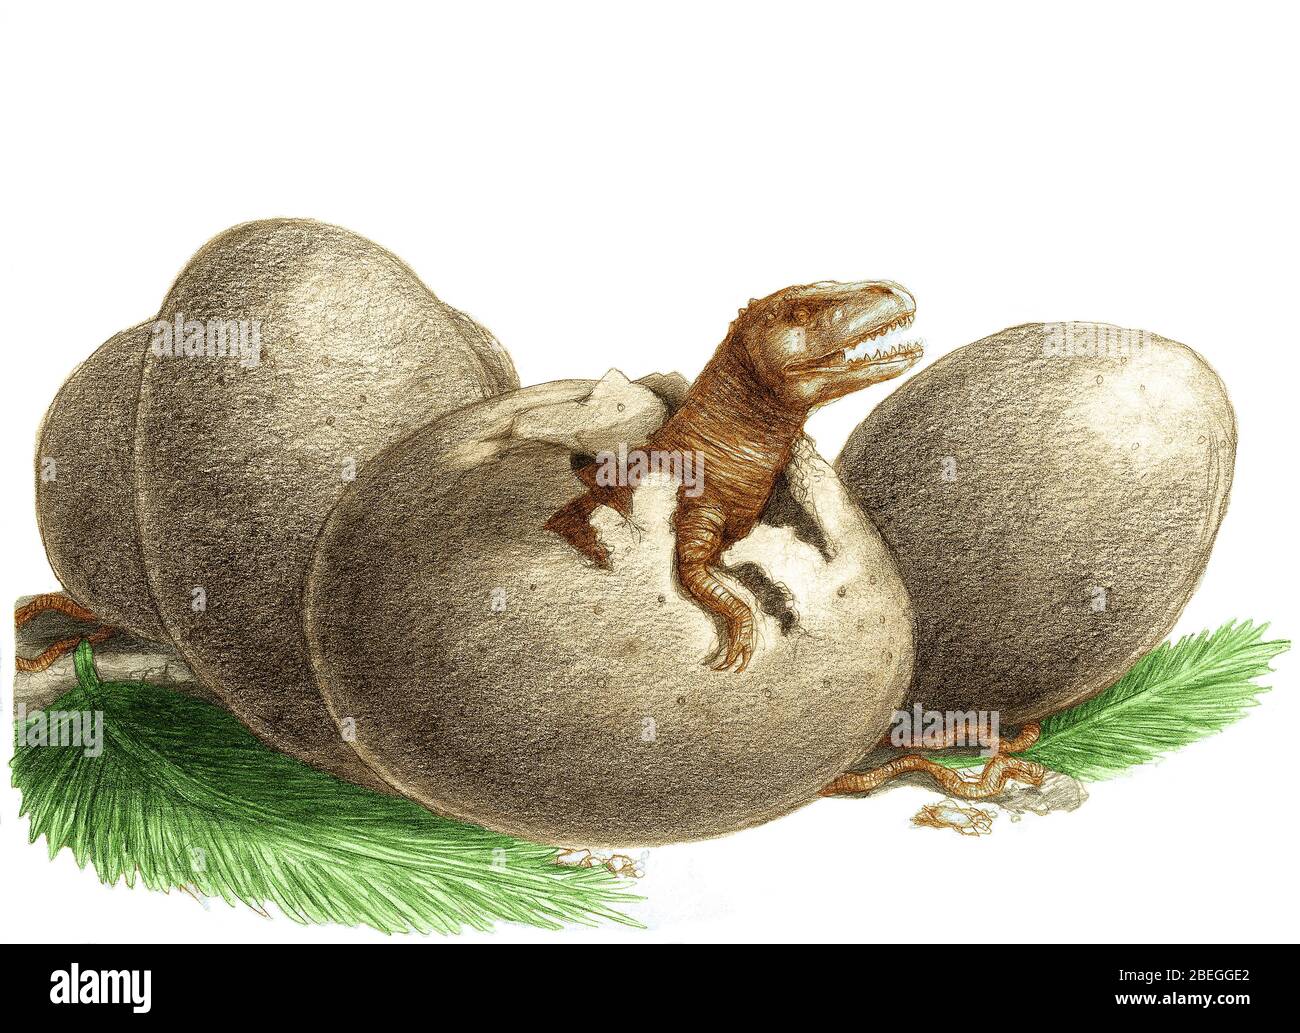 Asumir Habitar Insignificante Huevo de dinosaurio fotografías e imágenes de alta resolución - Alamy